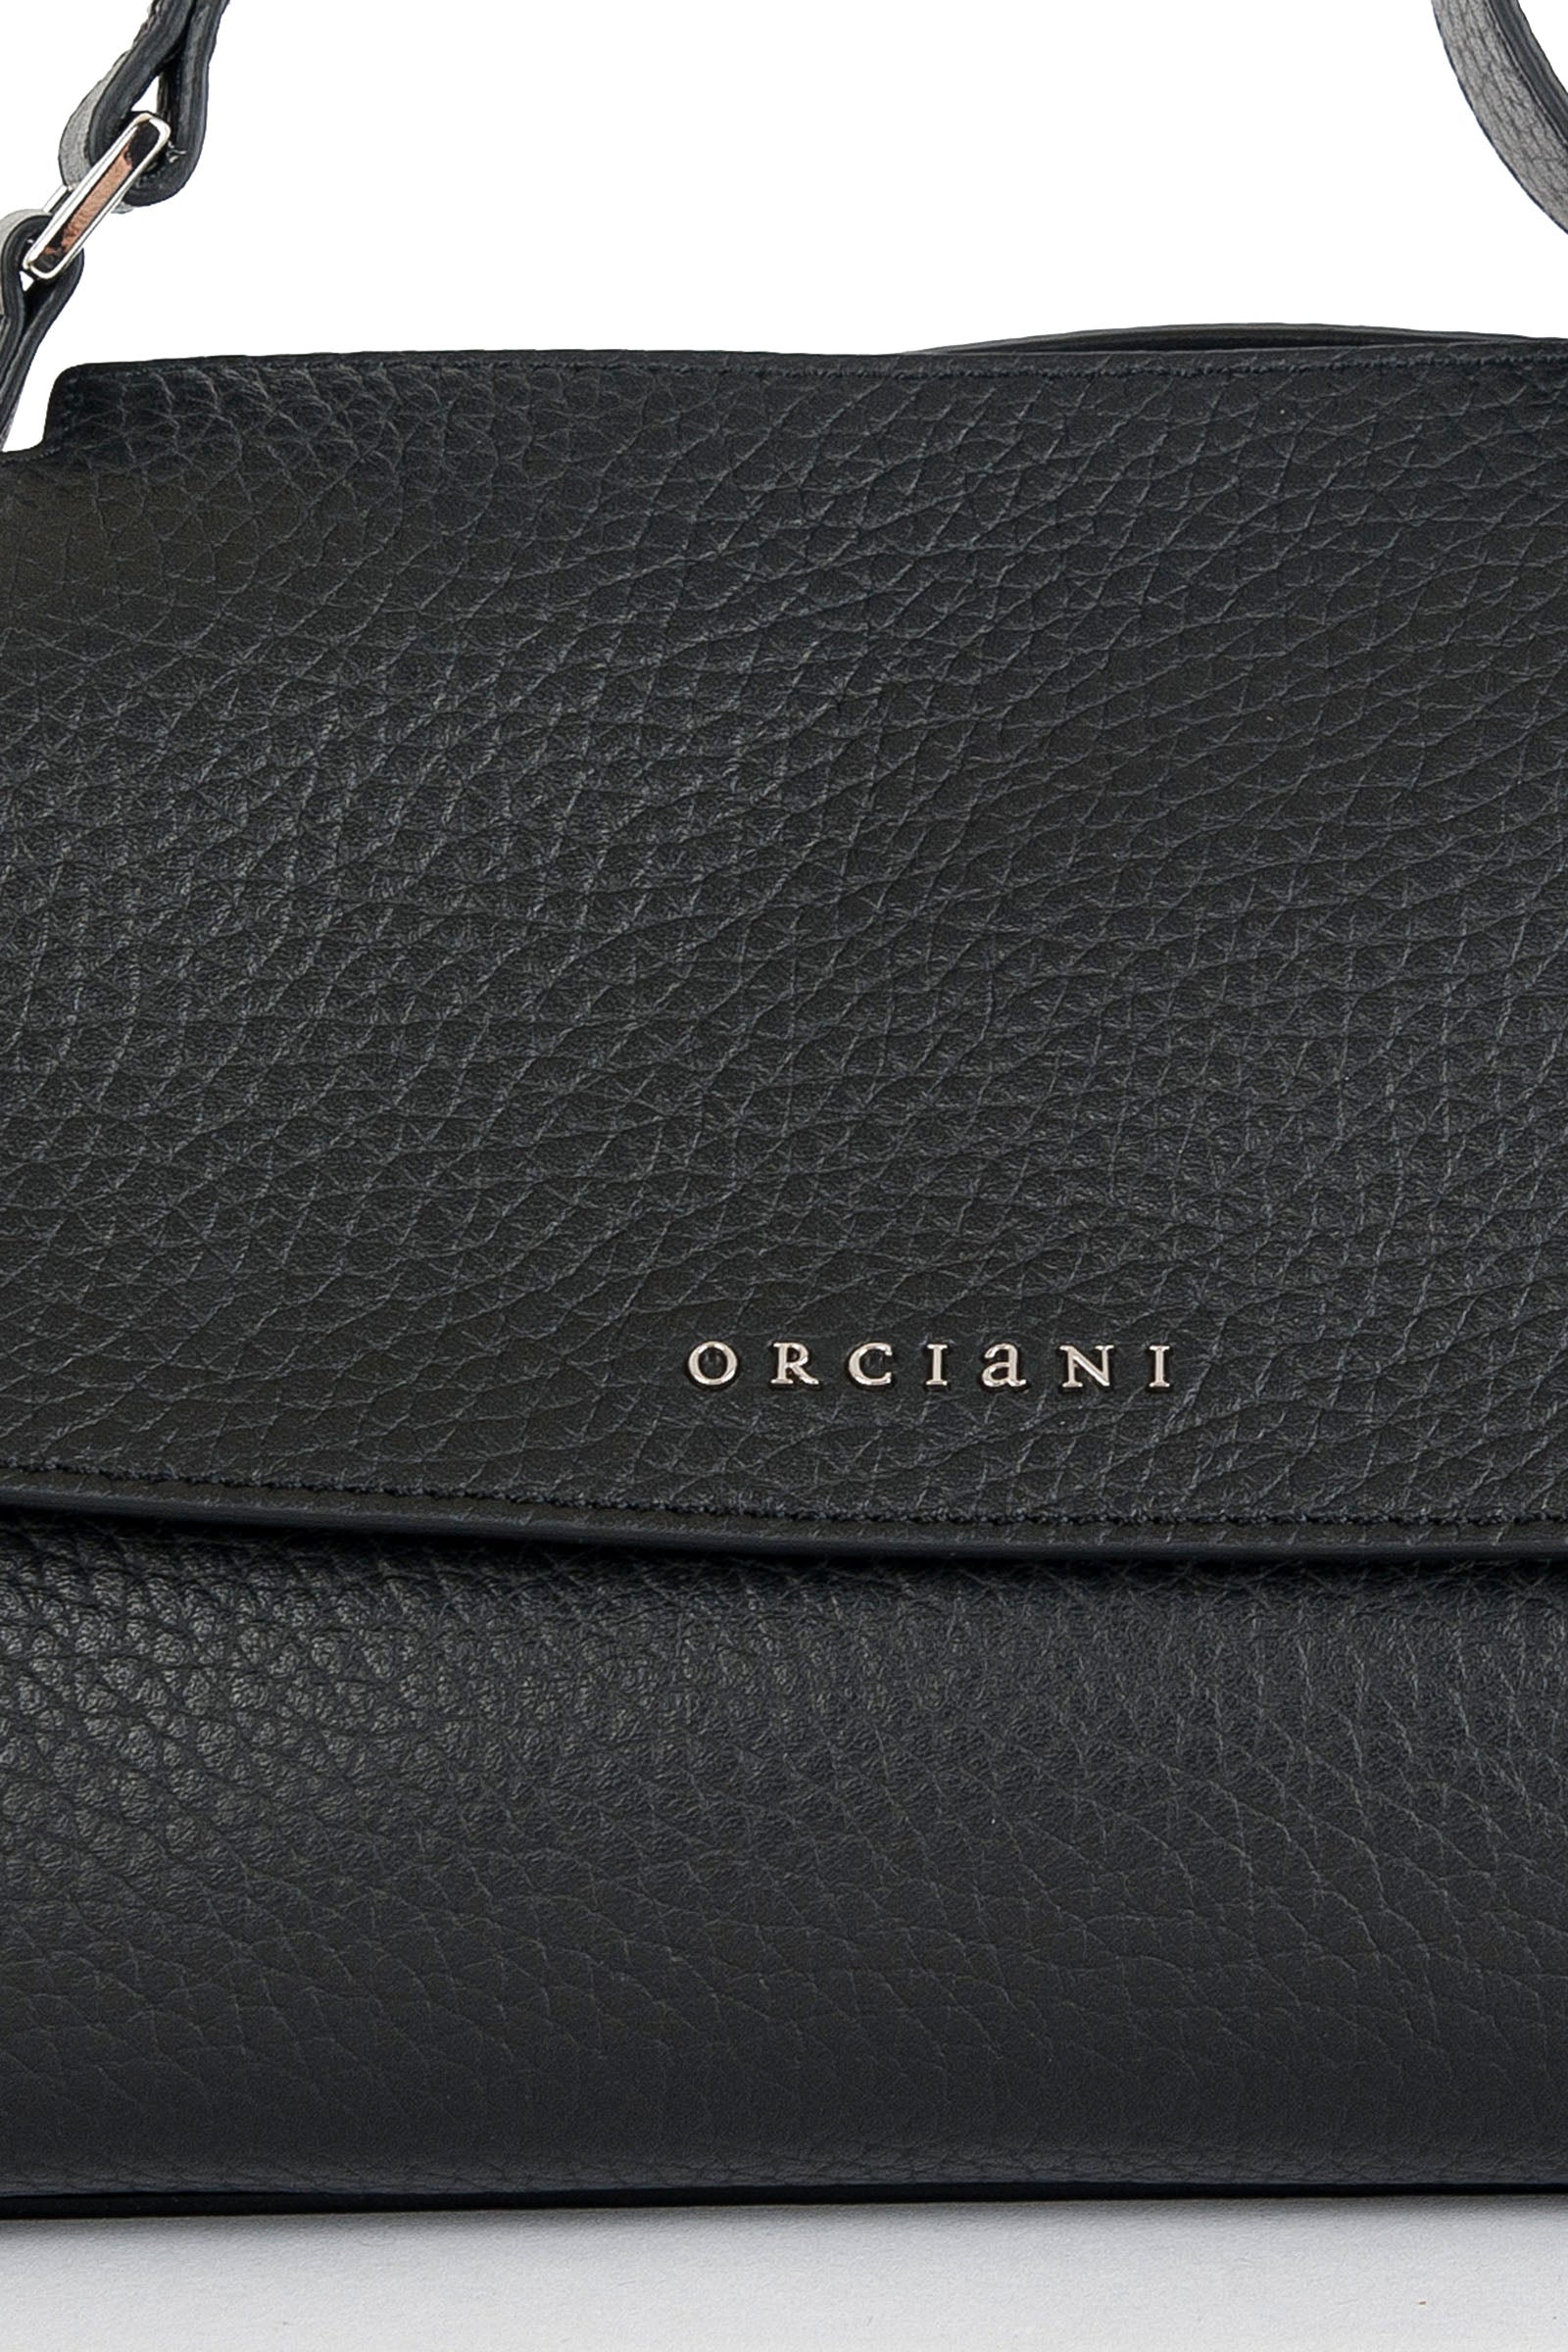 Orciani Sveva Longuette Soft Black Leather Bag - 4